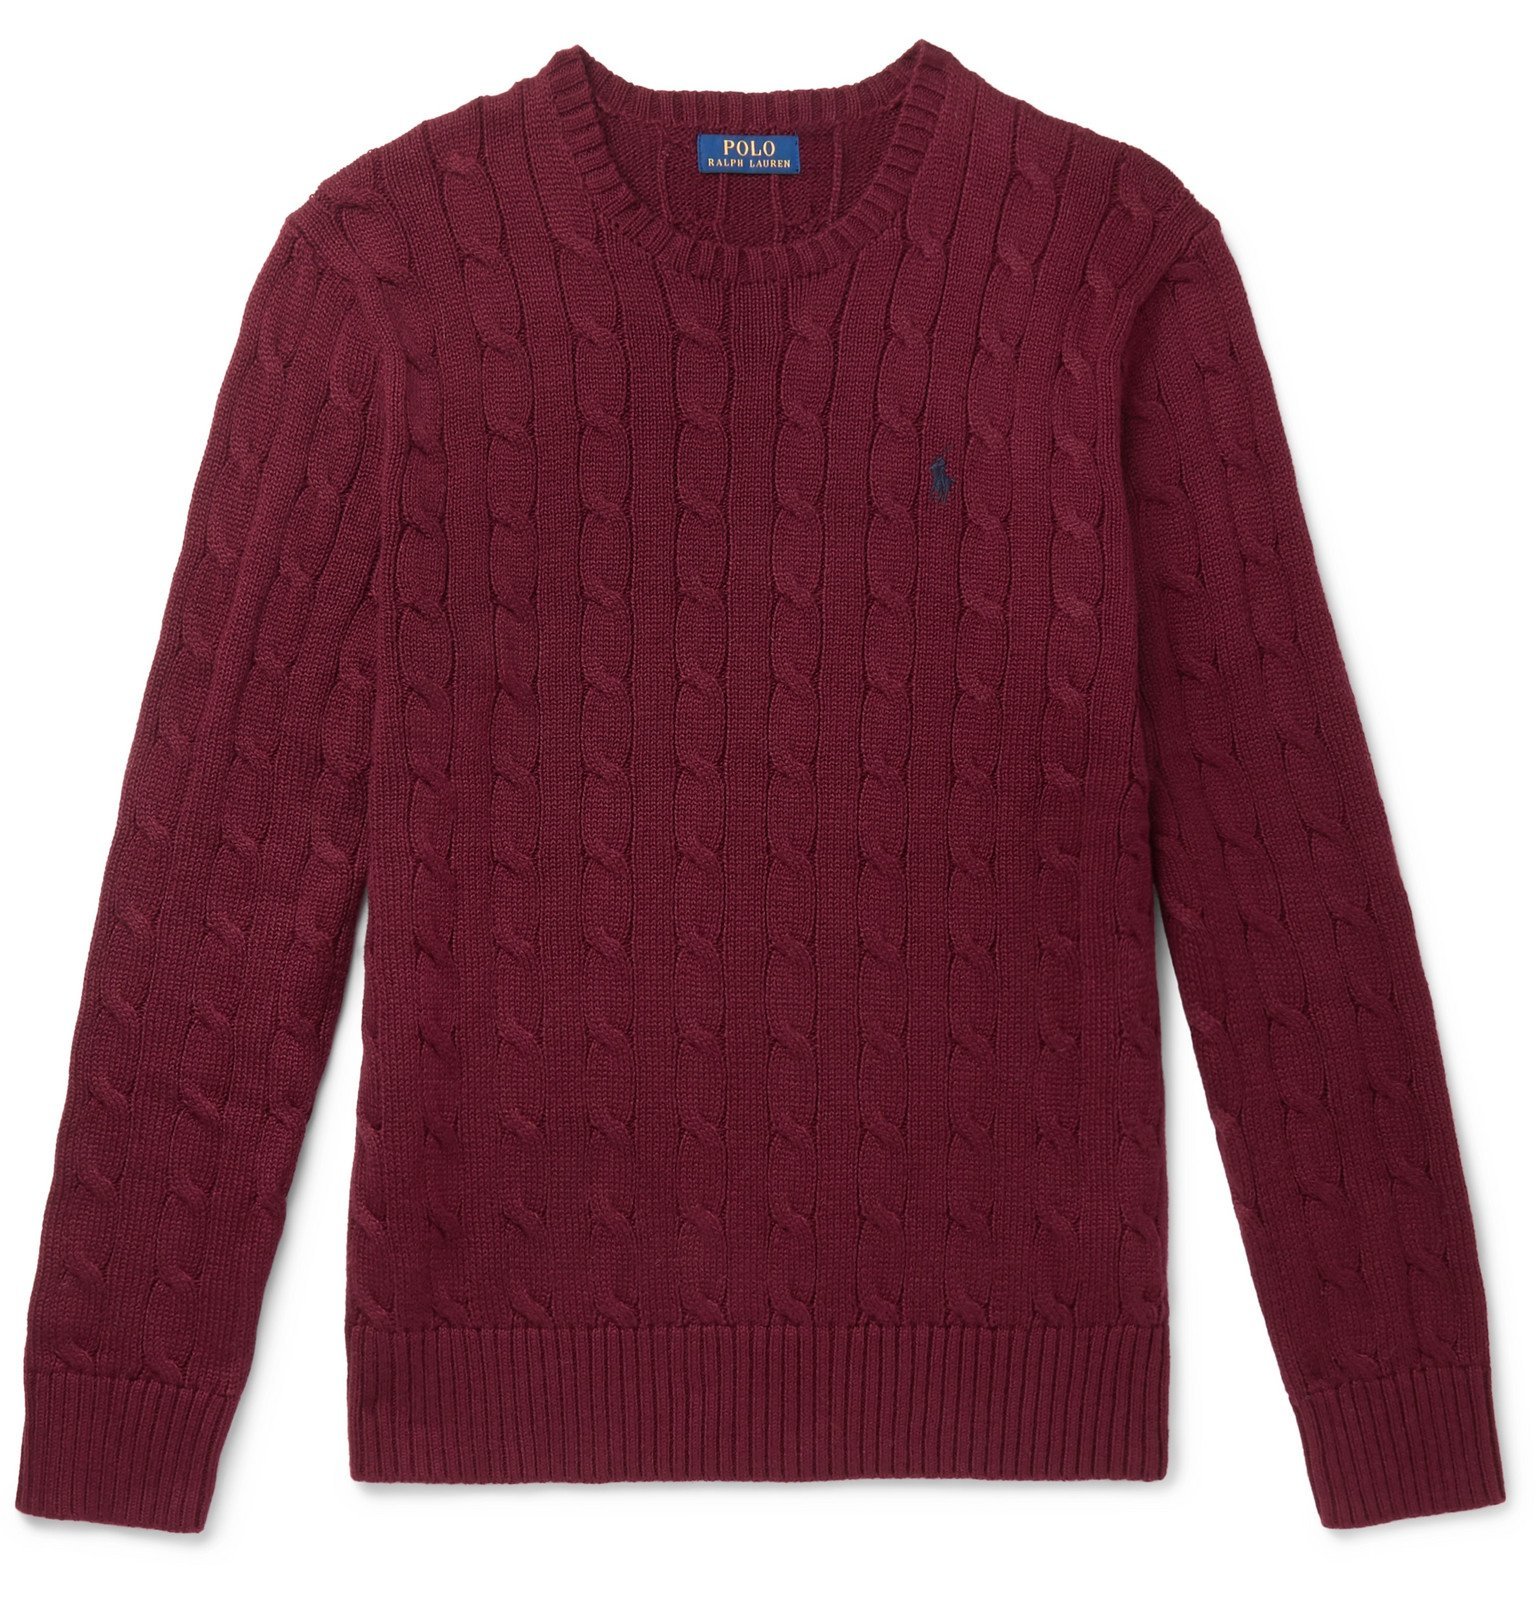 Polo Ralph Lauren - Cable-Knit Cotton Sweater - Burgundy Polo Ralph Lauren